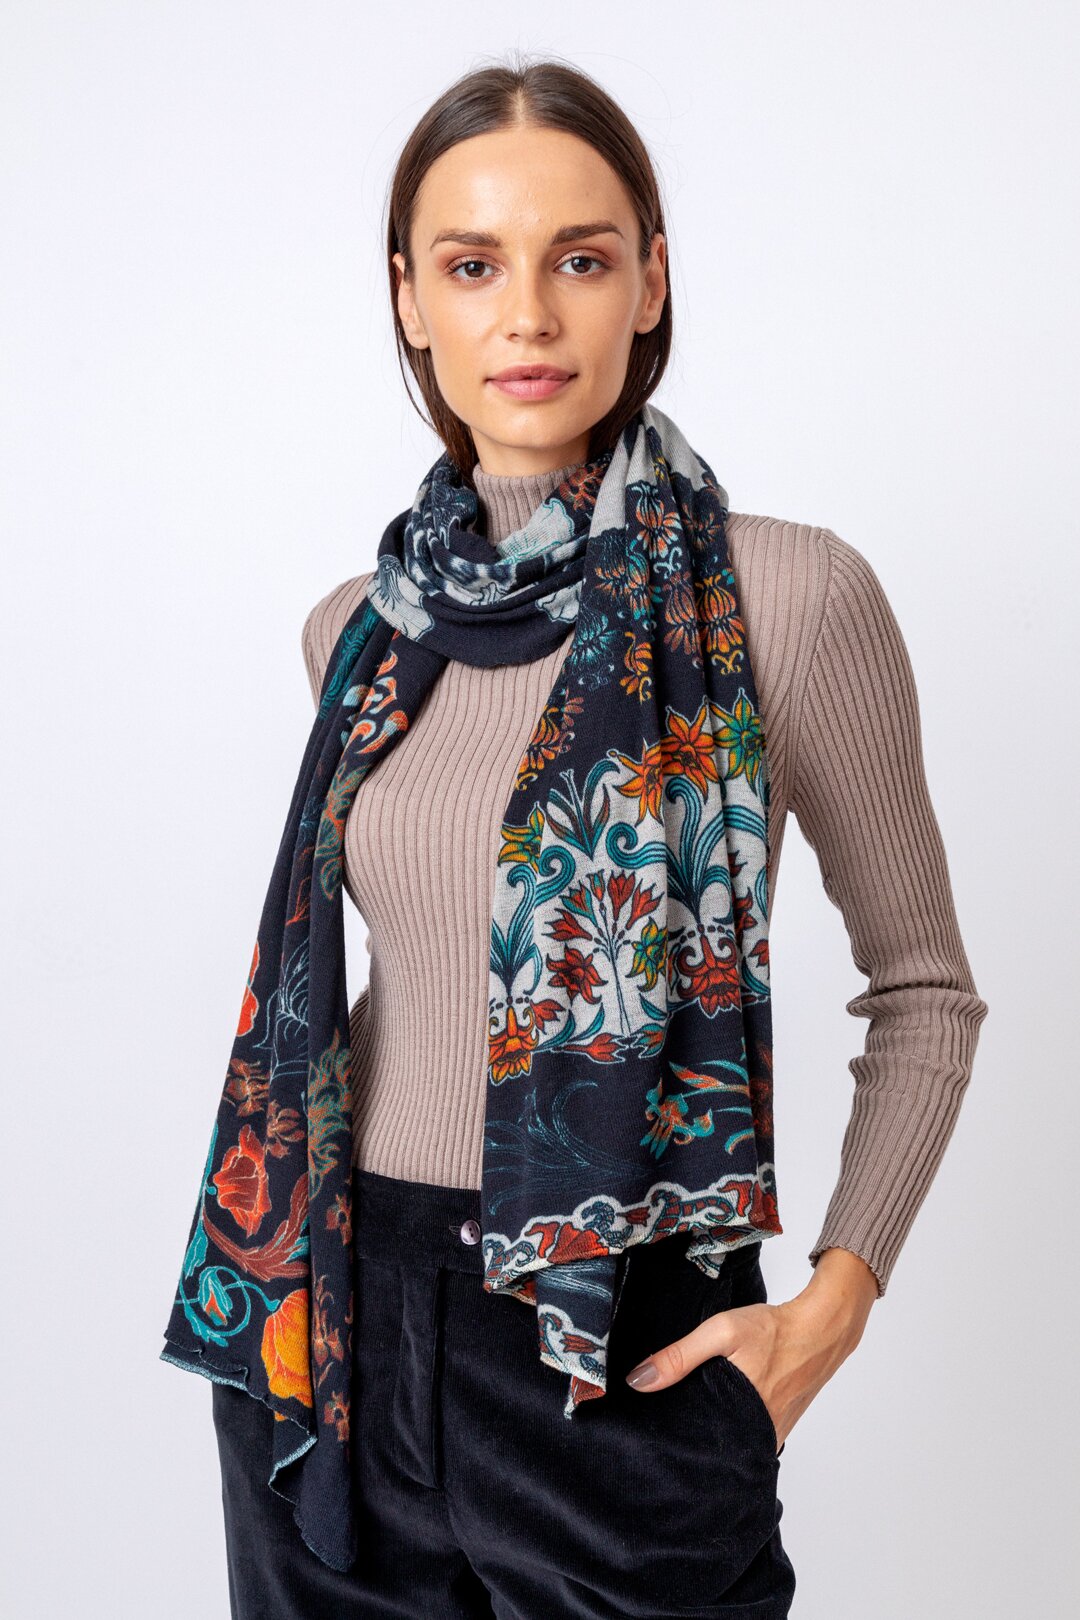 Bedruckter Schal mit floralem Grasset-Muster